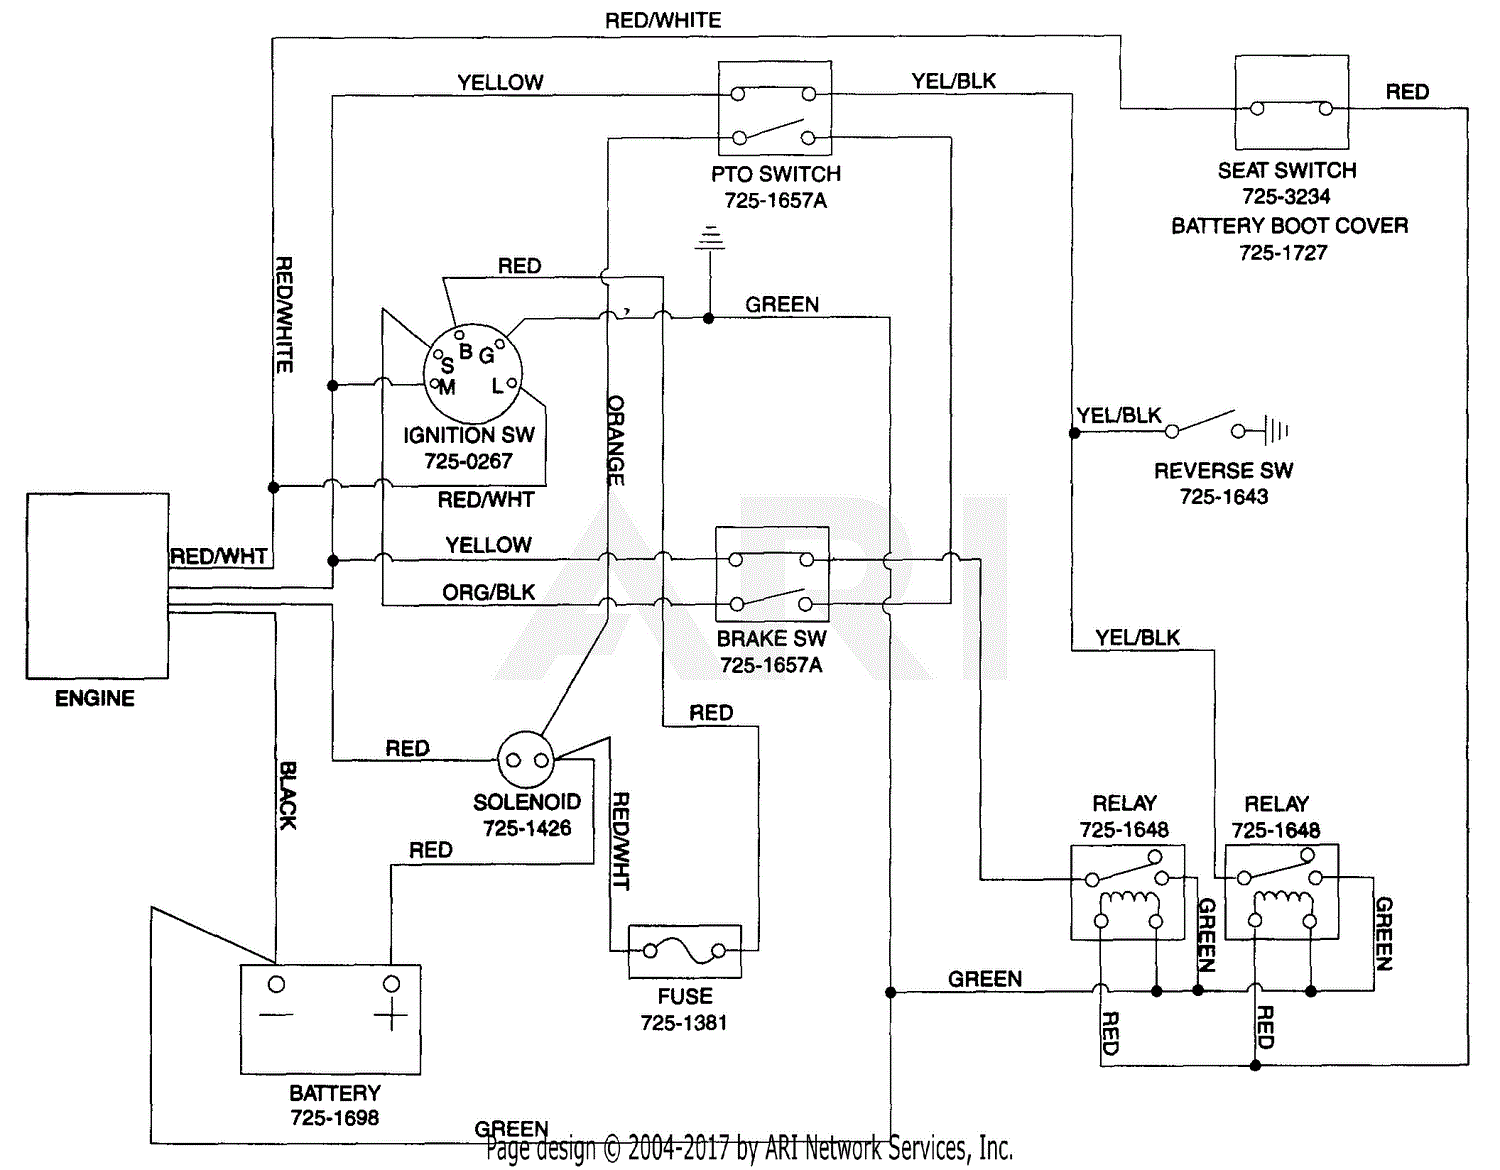 Diagram Mtd Wiring Diagram Model 13as679g062 Full Version Hd Quality Model 13as679g062